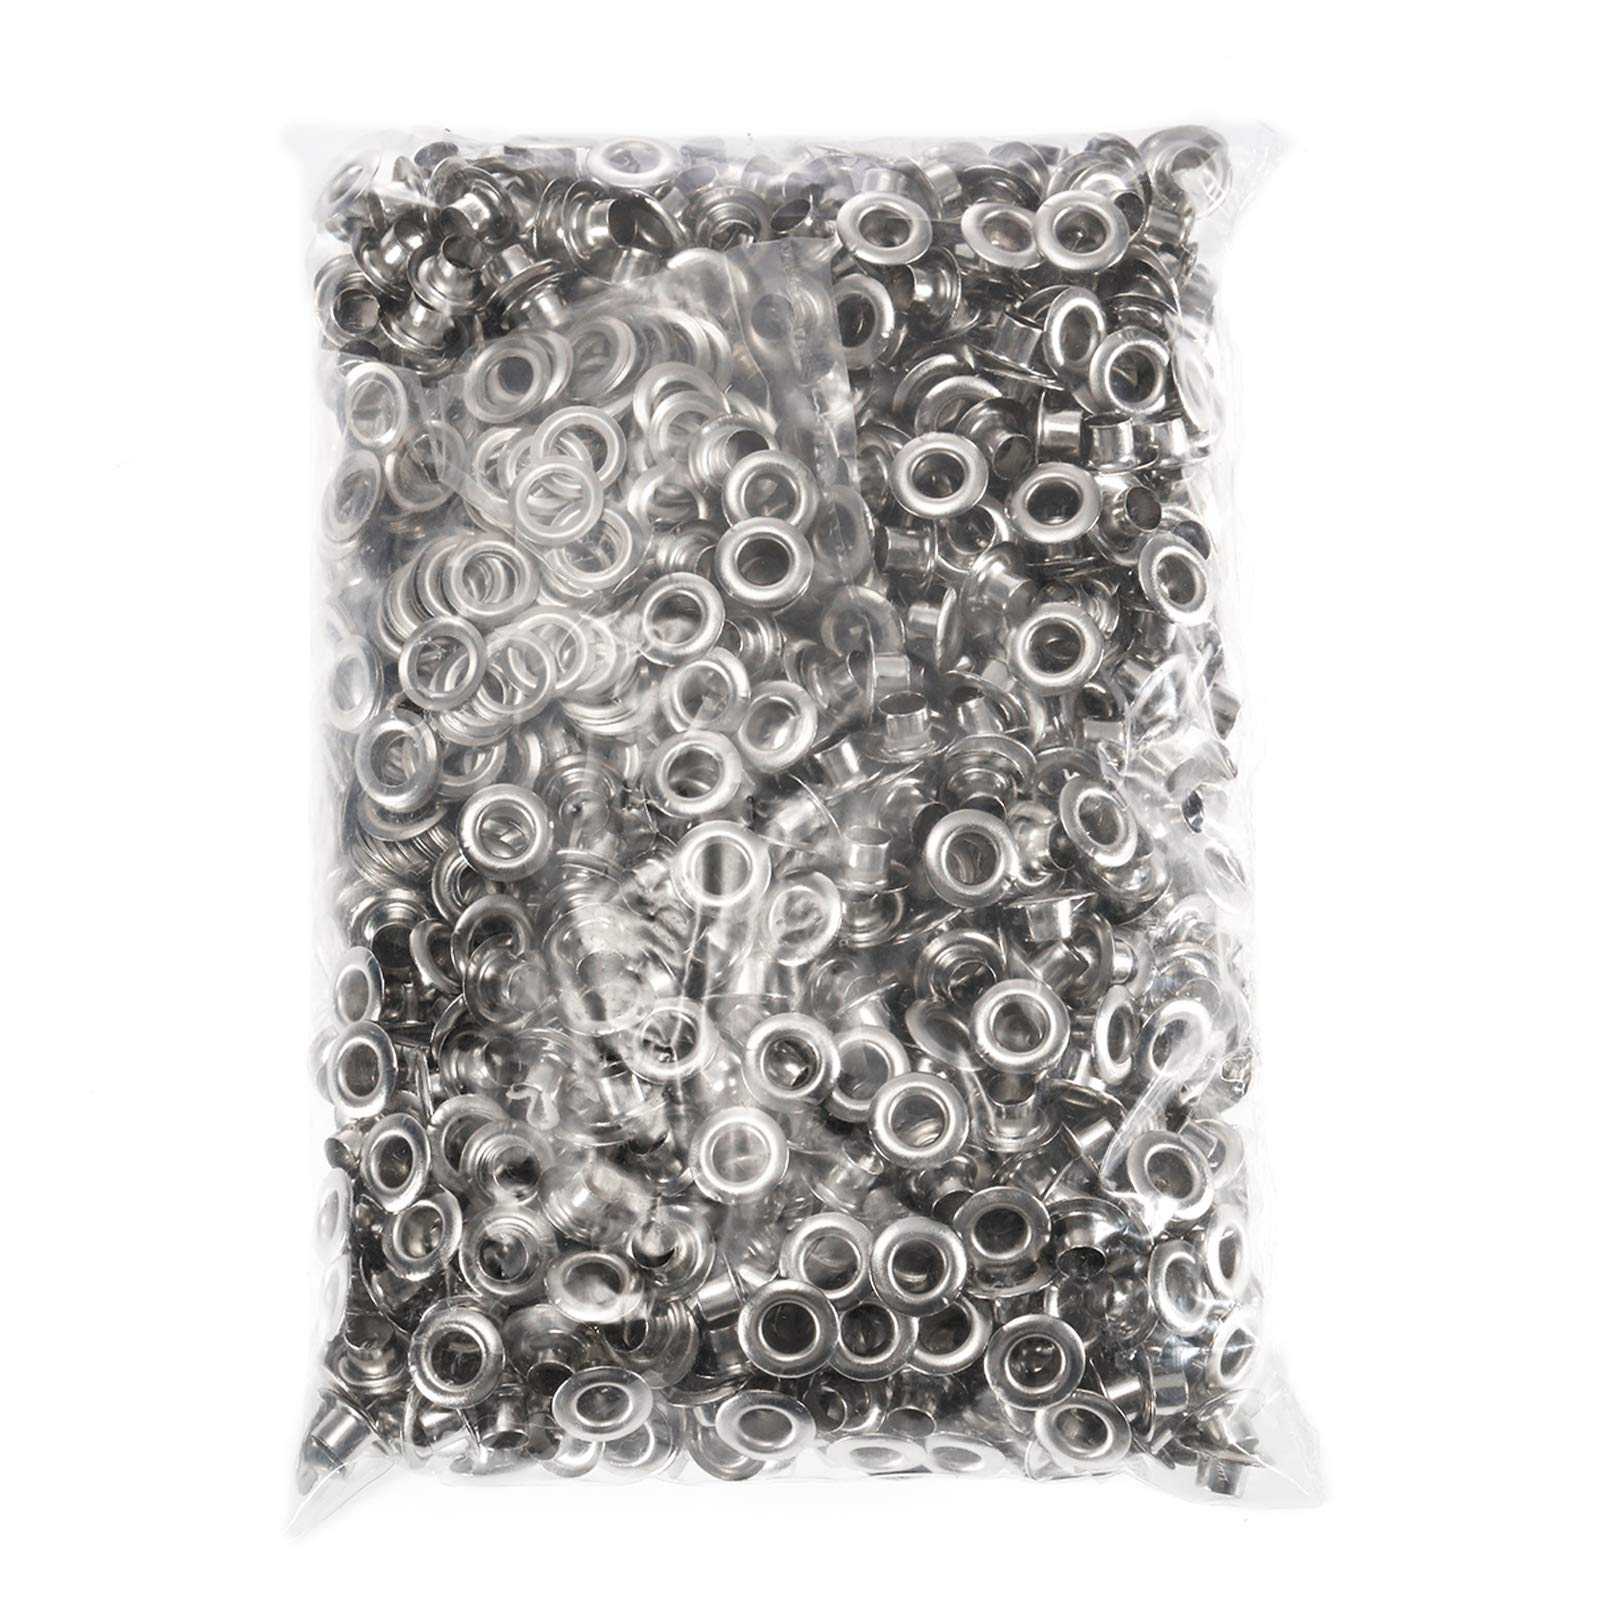 Grommet Kit,Grommets 1/4 Inch Heavy Duty Metal Eyelets Kit for Fabric  Leather